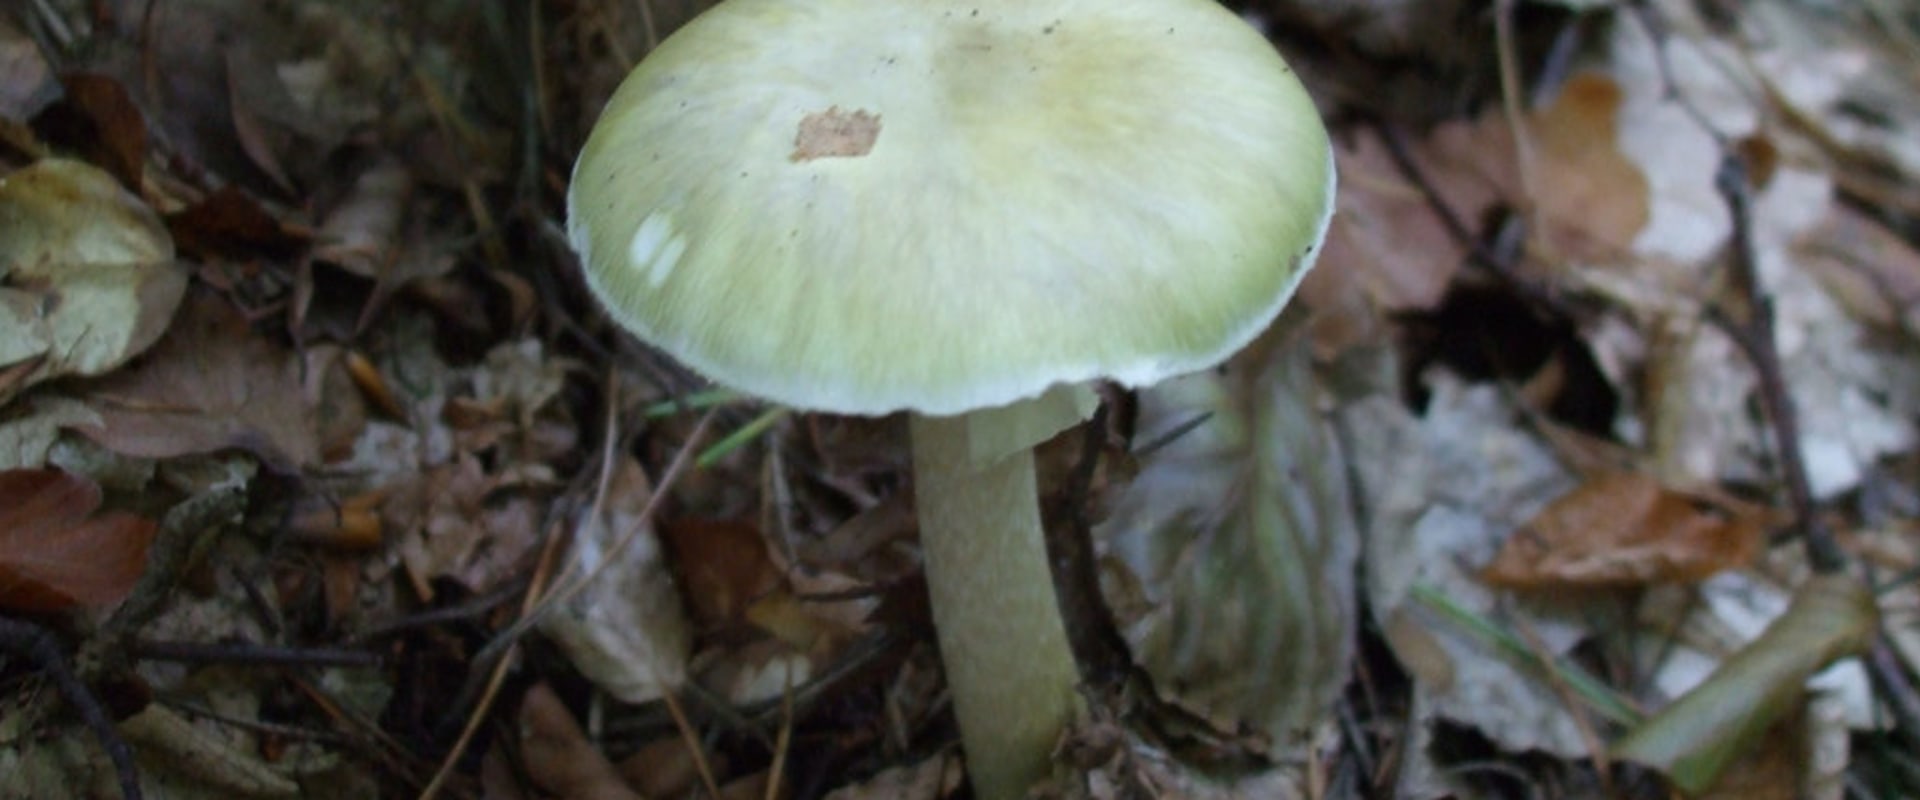 Kun je paddenstoelen eten uit je achtertuin?